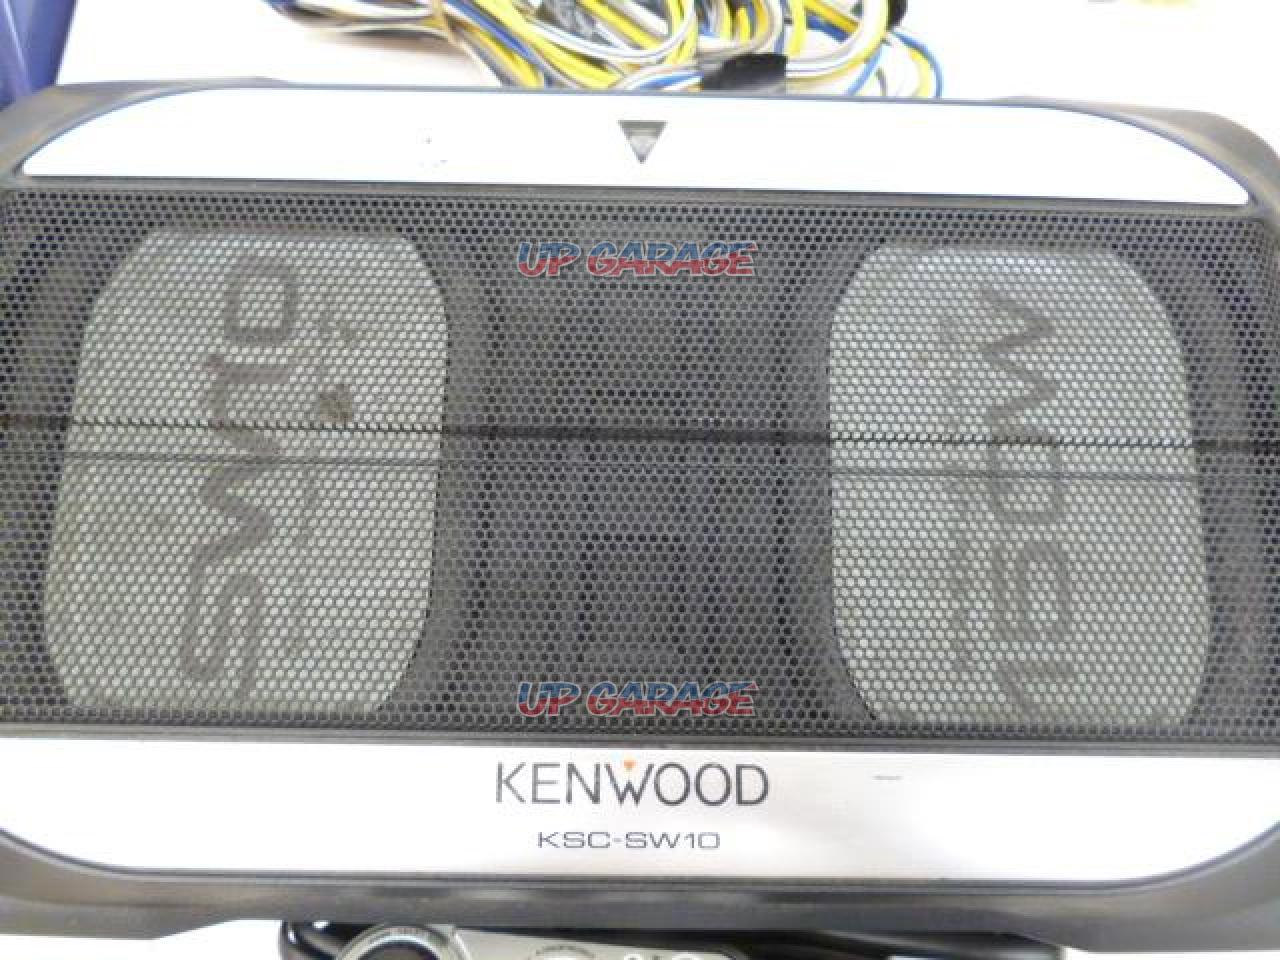 KENWOOD(ケンウッド)KSC-SW10 チューンナップサブウーファー